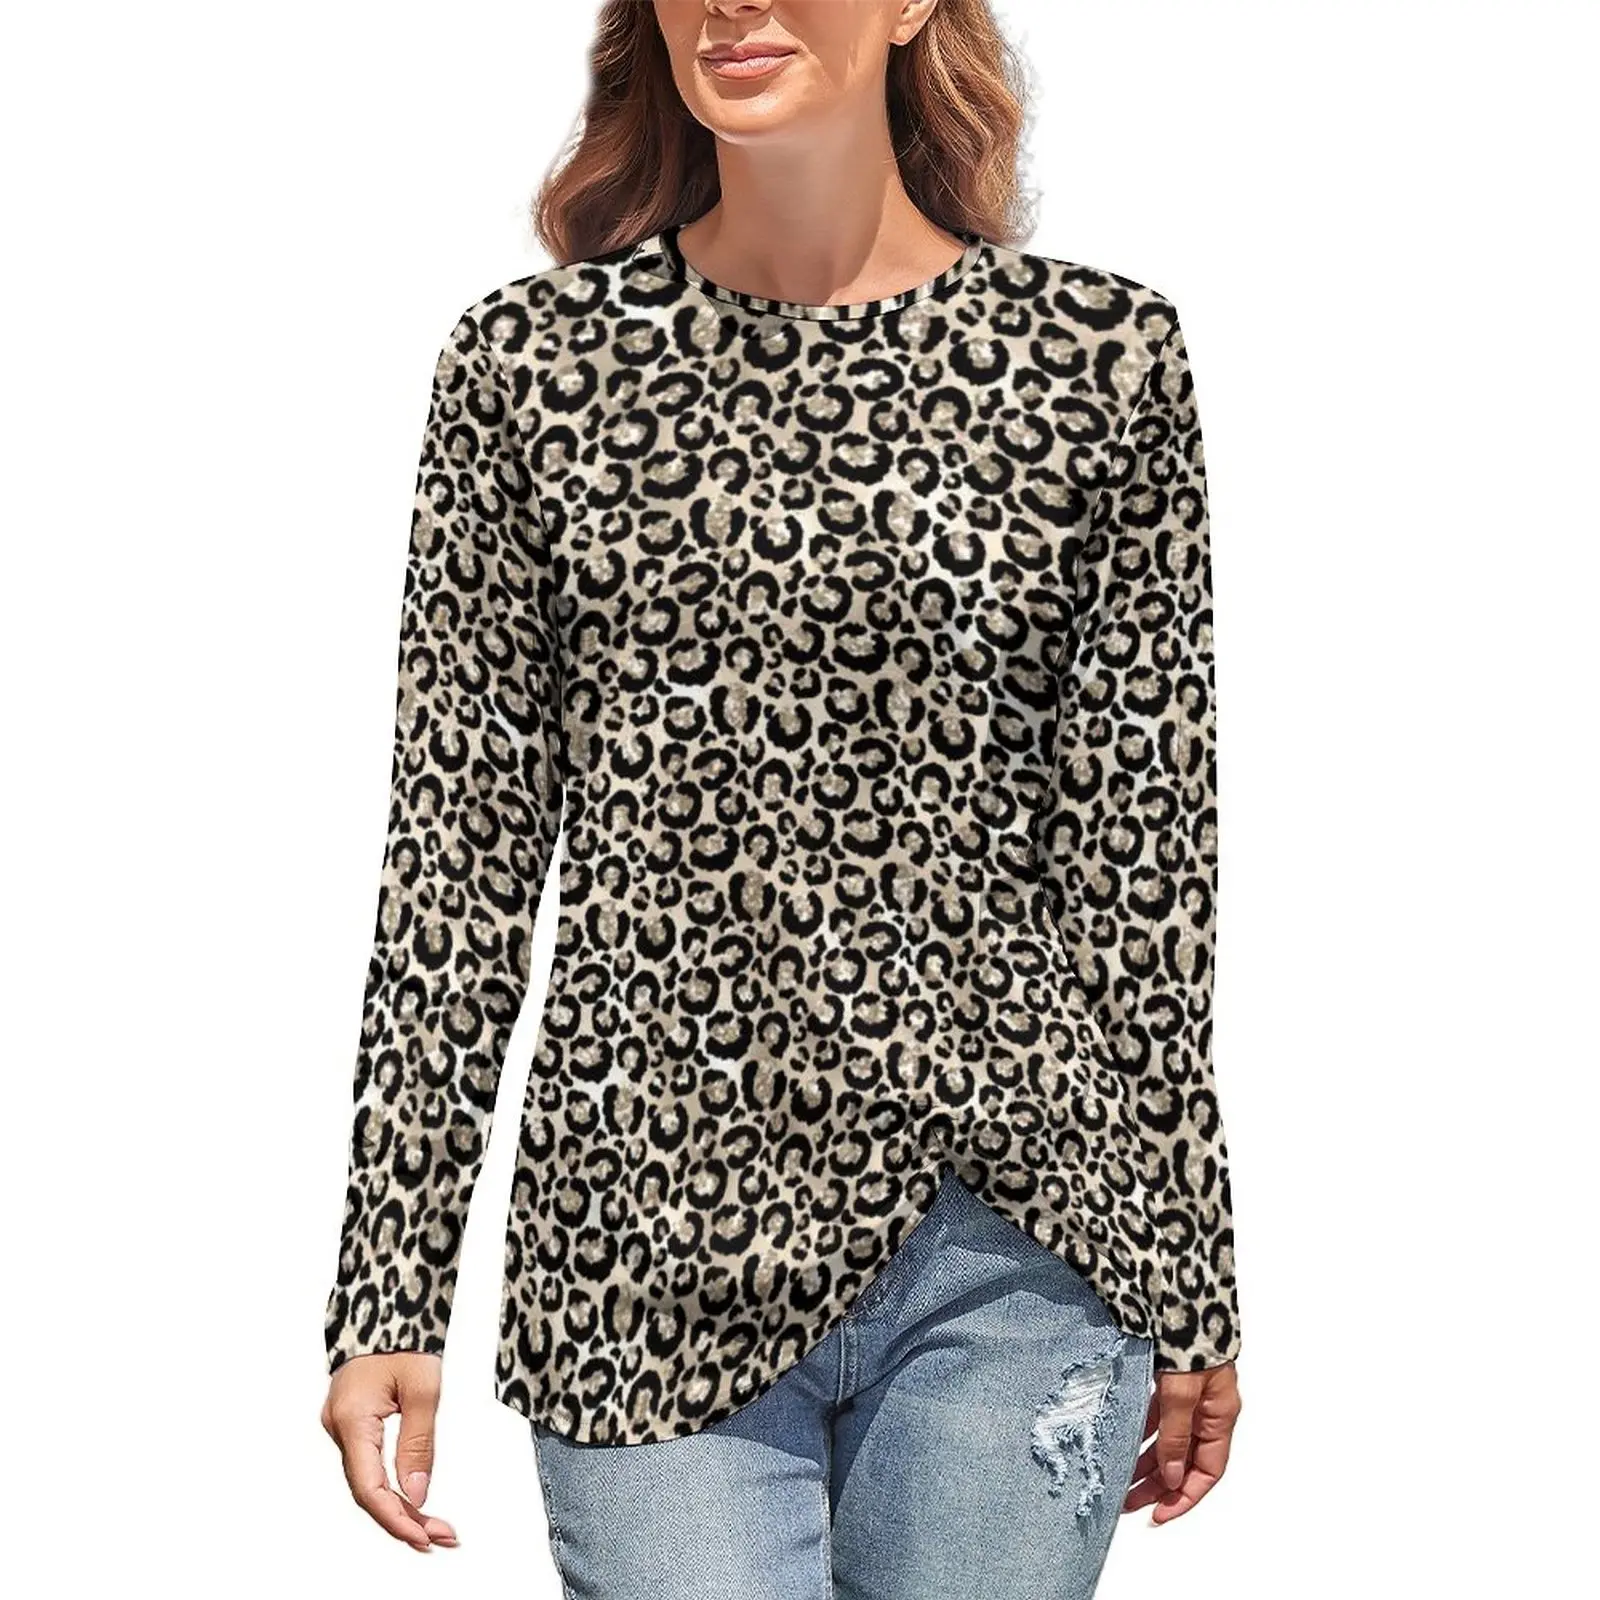 

Glitter Cheetah Spots T Shirts Glam Champagne Leopard Print Street Fashion Long Sleeve T Shirt Funny Pattern Tees Big Size 4XL